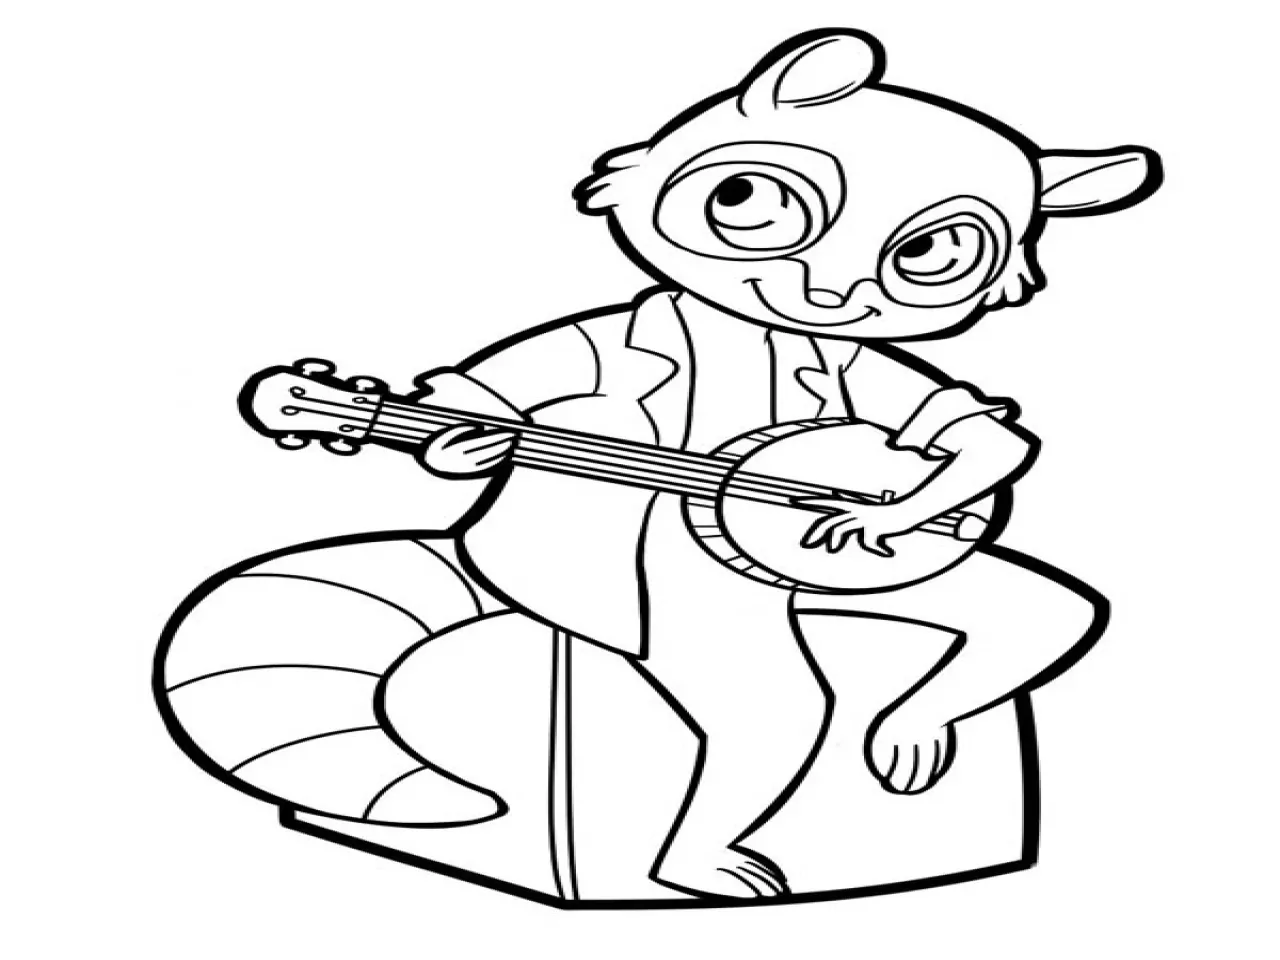 Raccoon Playing Banjo